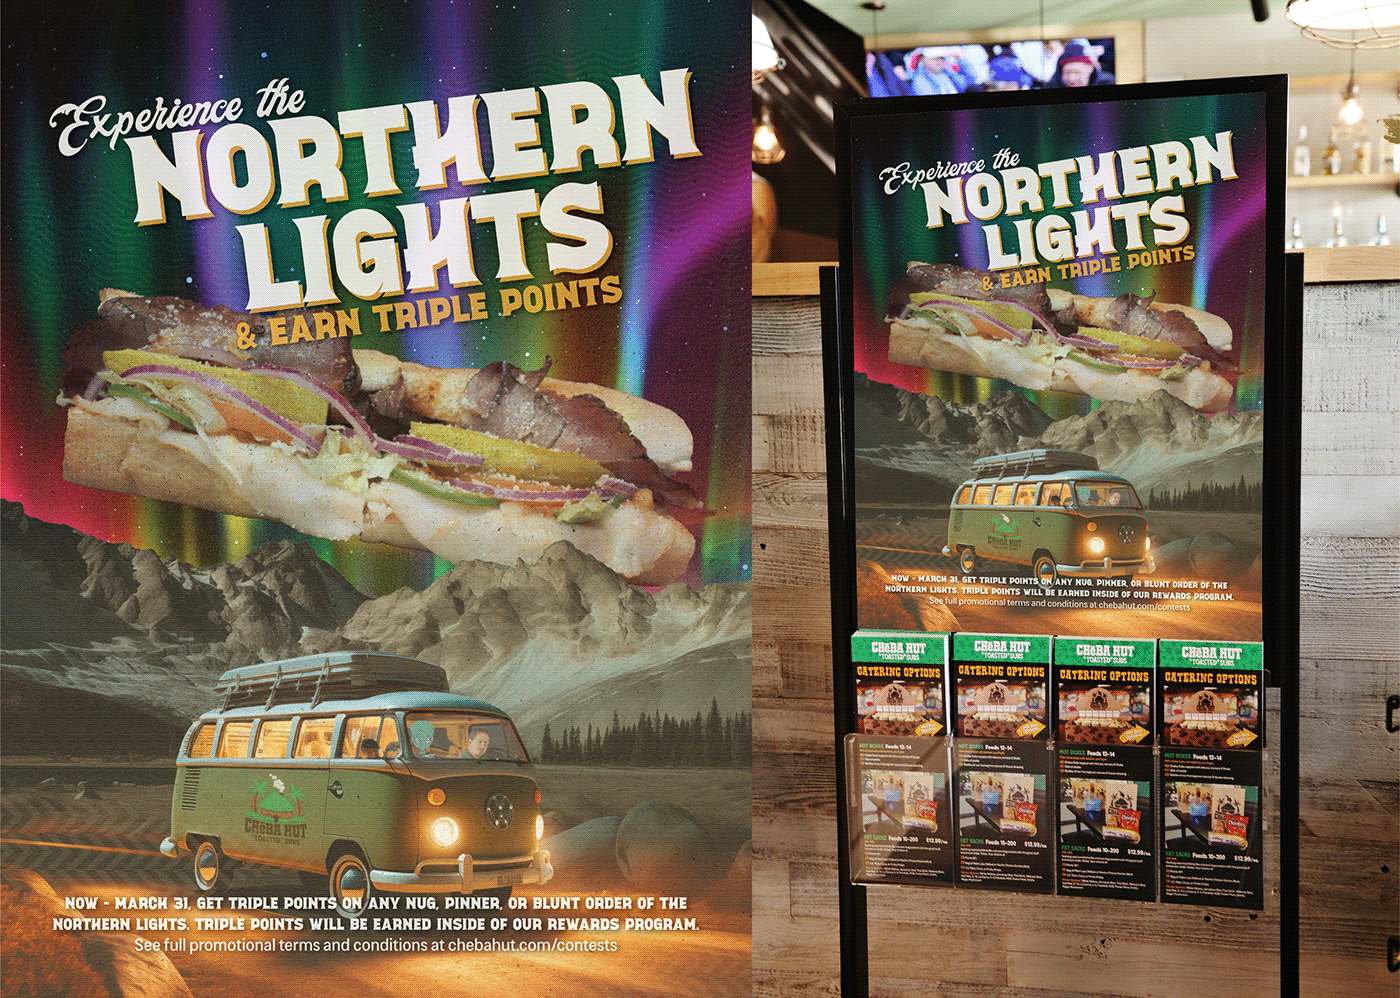 Northern Lights Aurora Borealis sandwich Promotion Advertising  poster advertisement restaurant Food  Cheba Hut